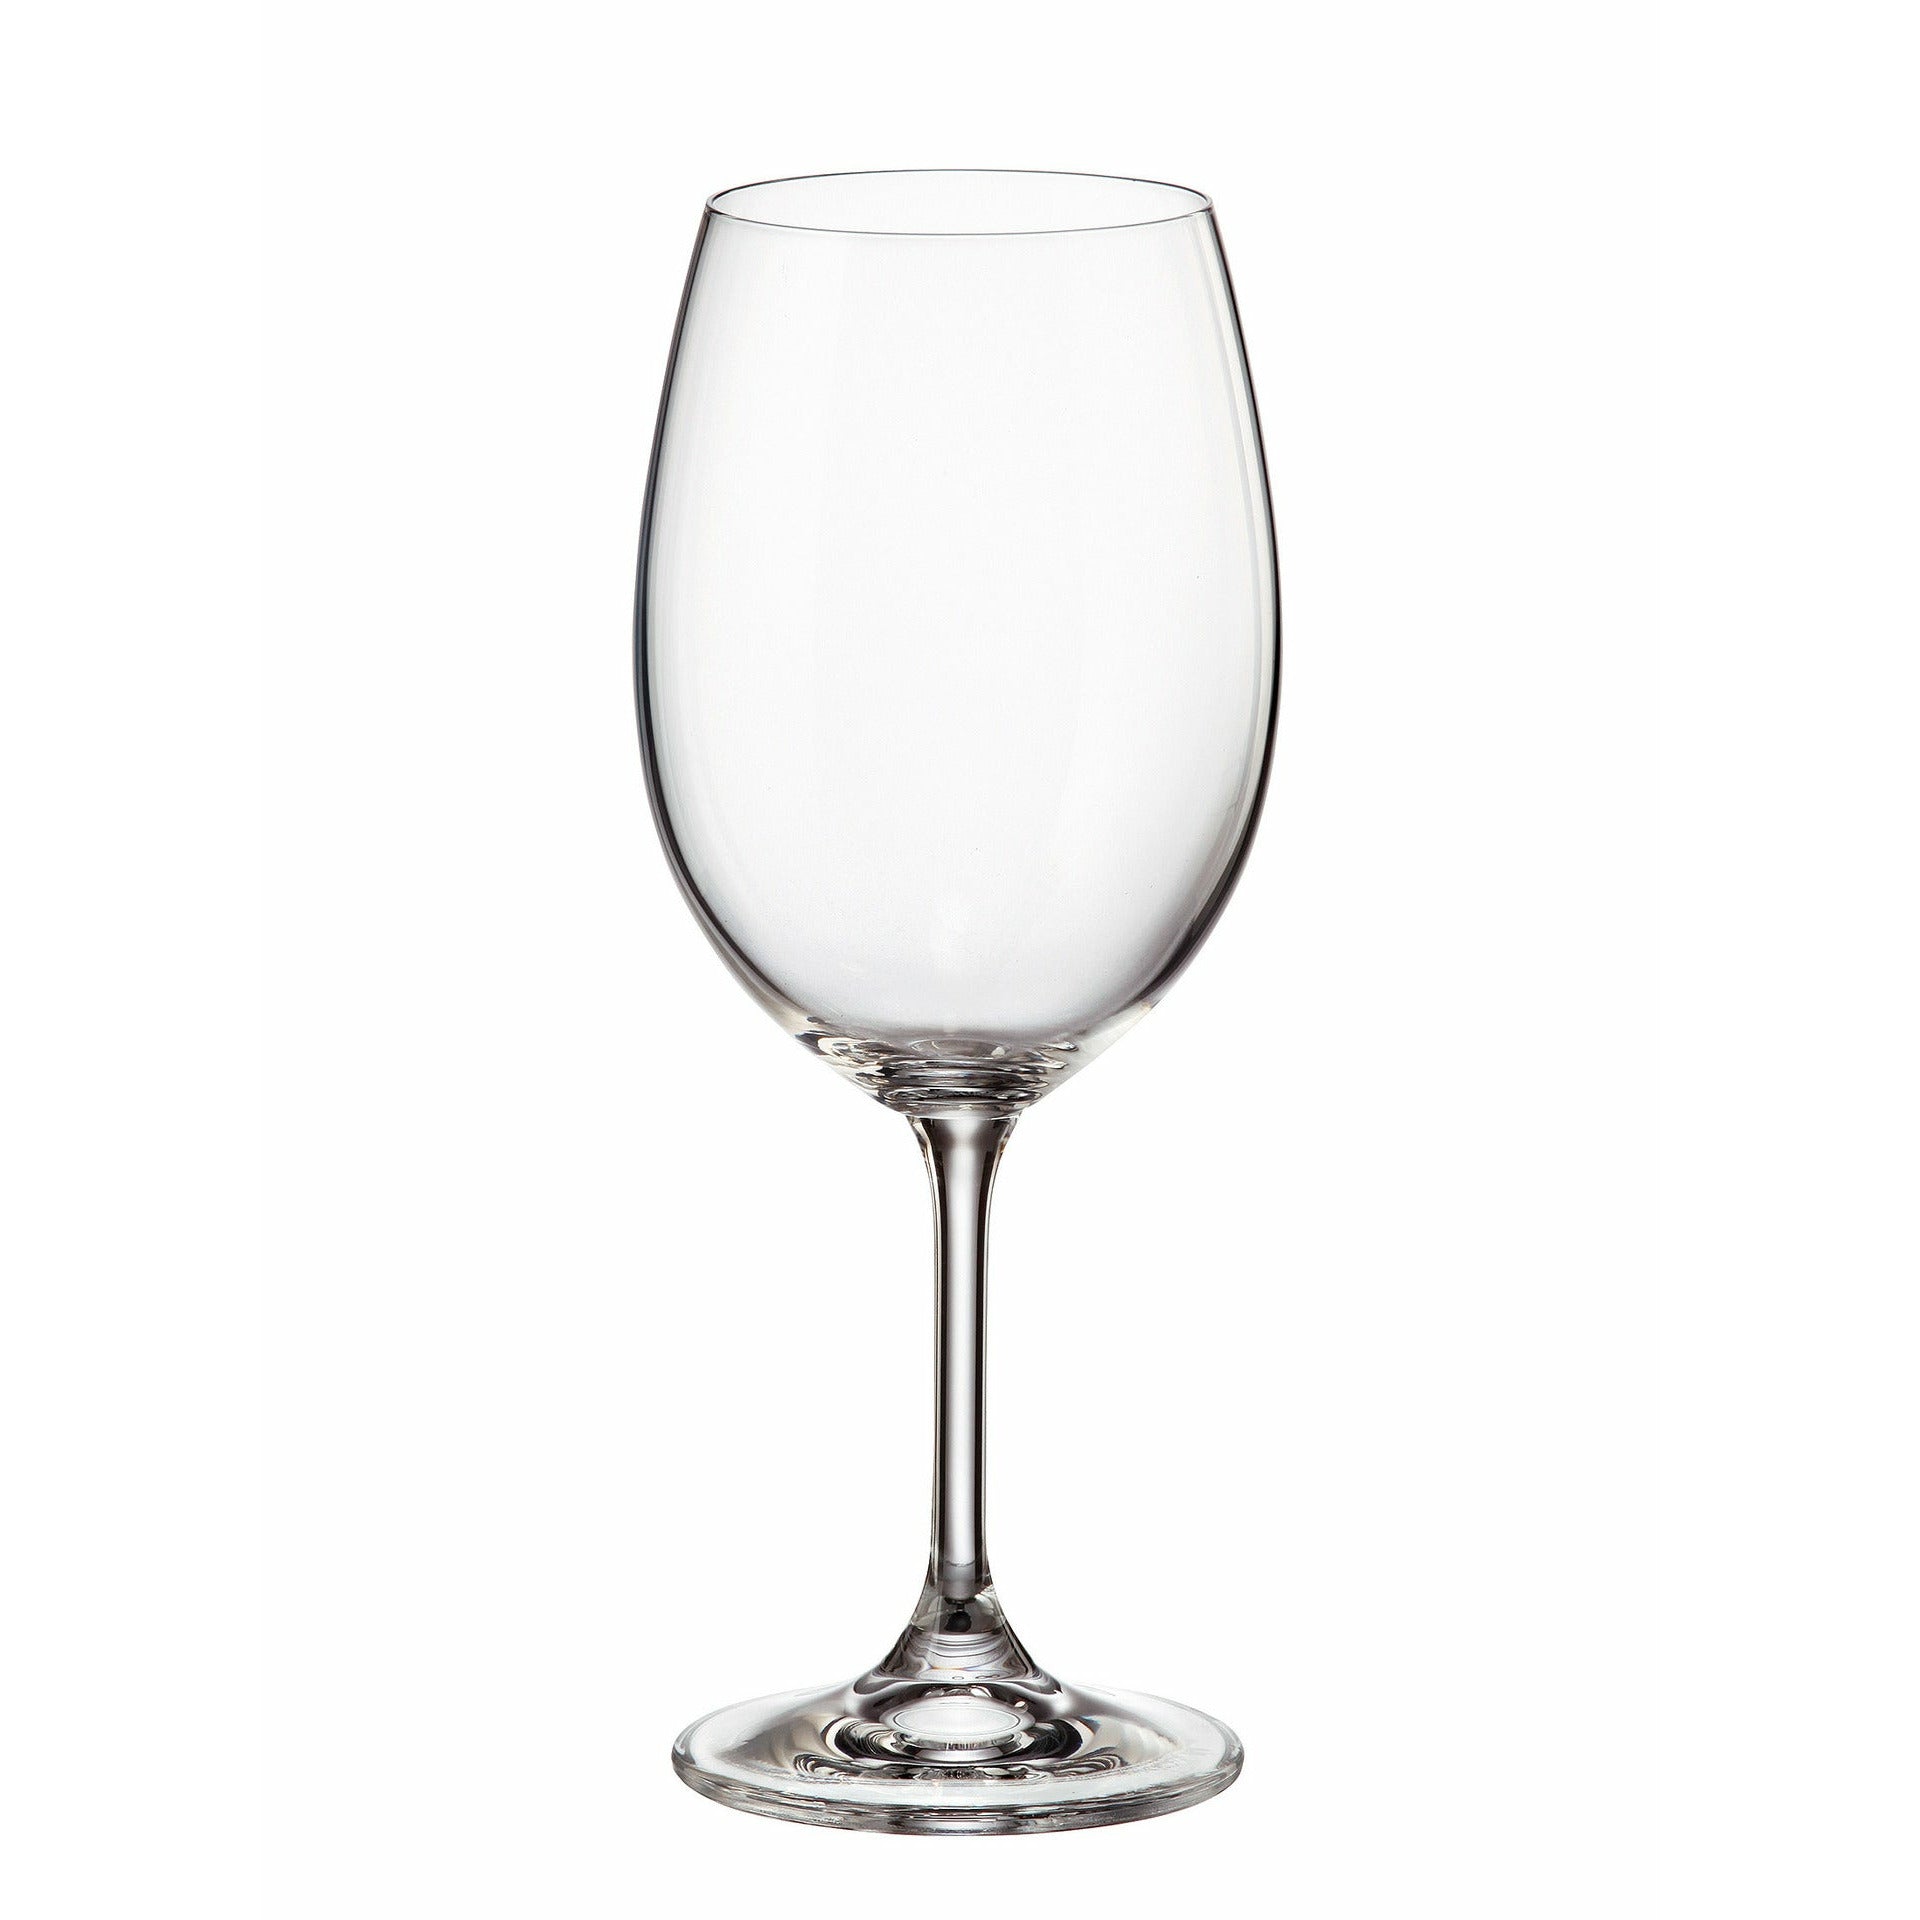  Copas de vino de cristal, copa de vino de cristal